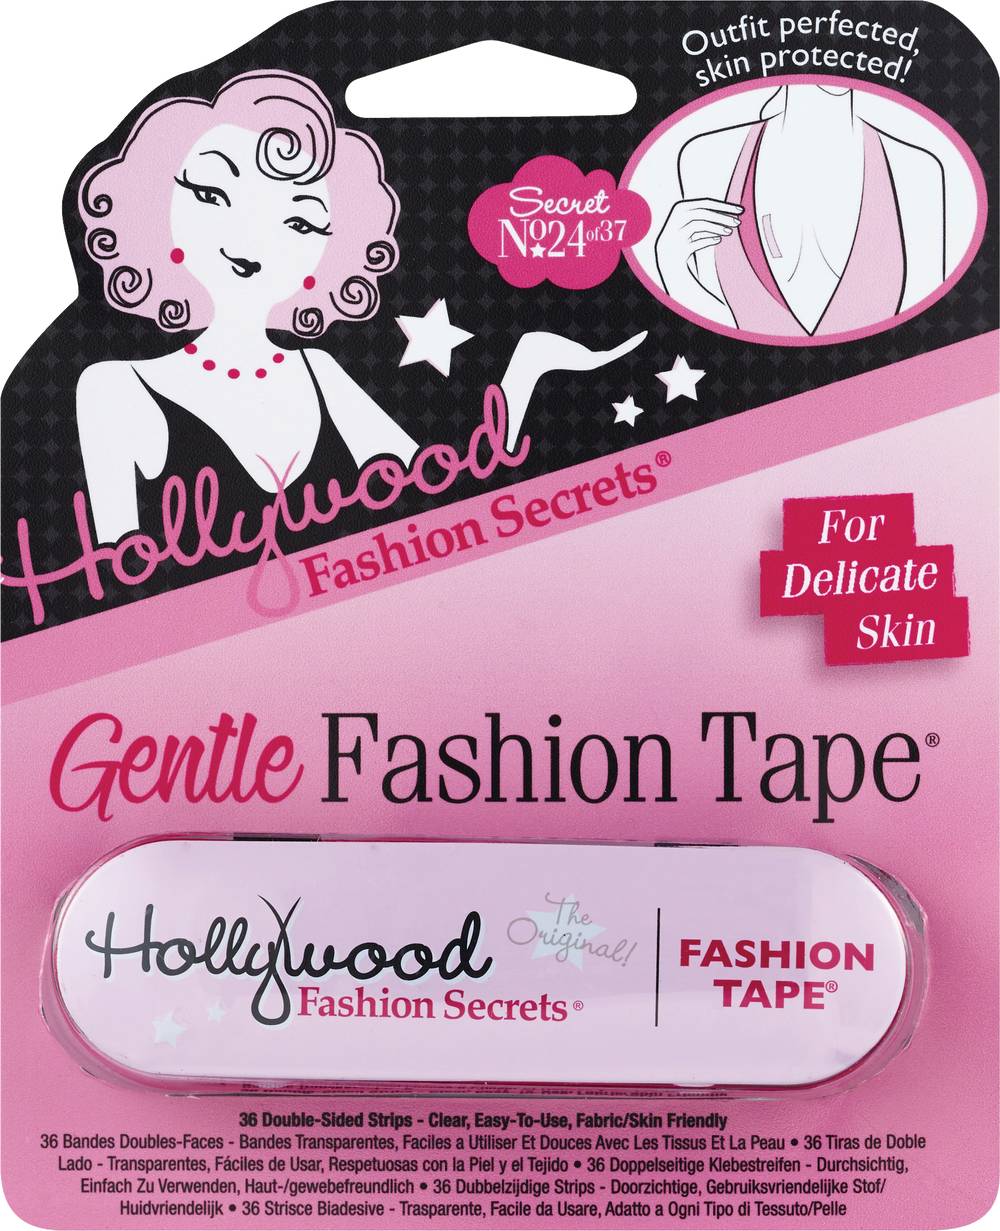 Hollywood Fashion Secrets Gentle Fashion Tape (light pink)